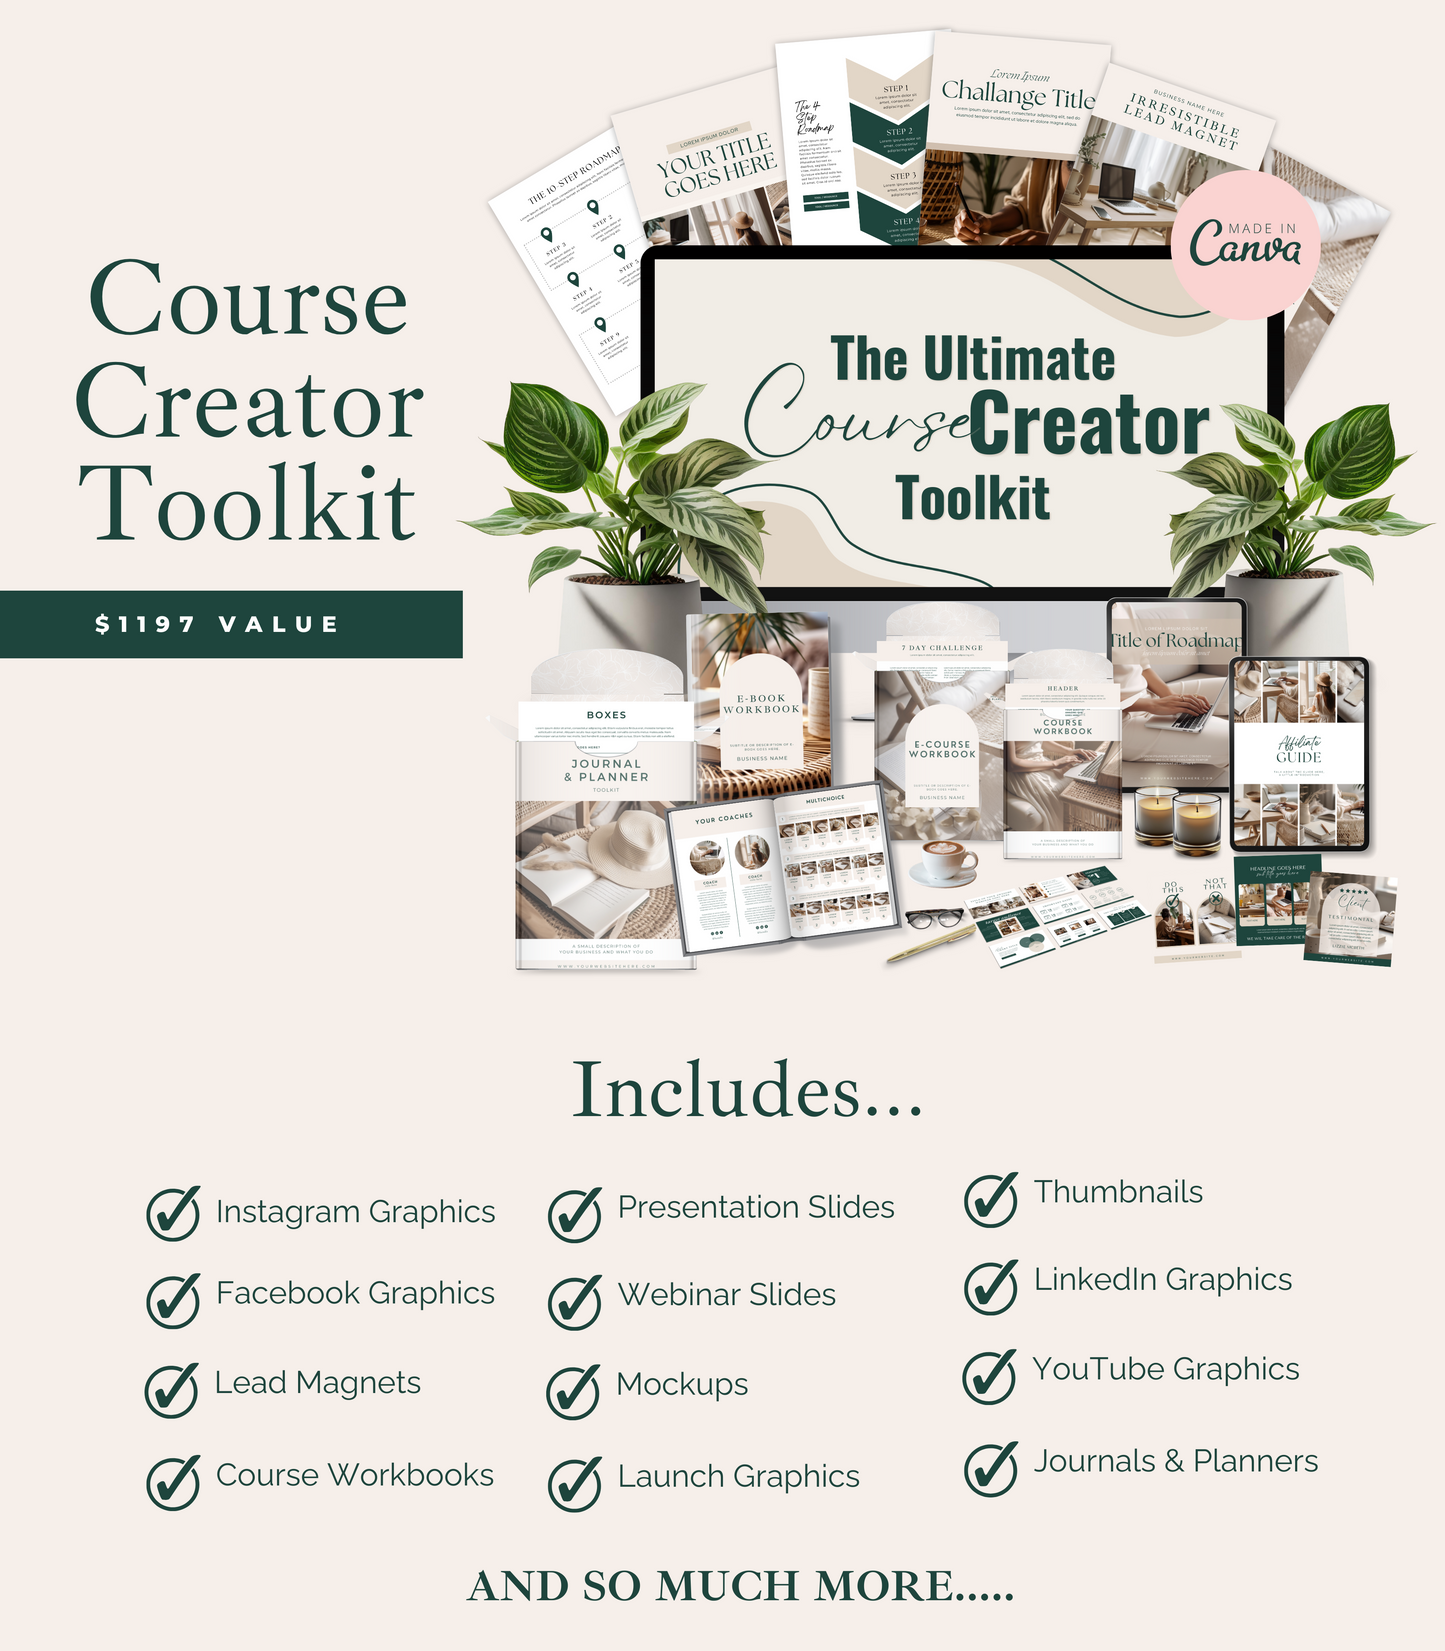 Course Creator Toolkit